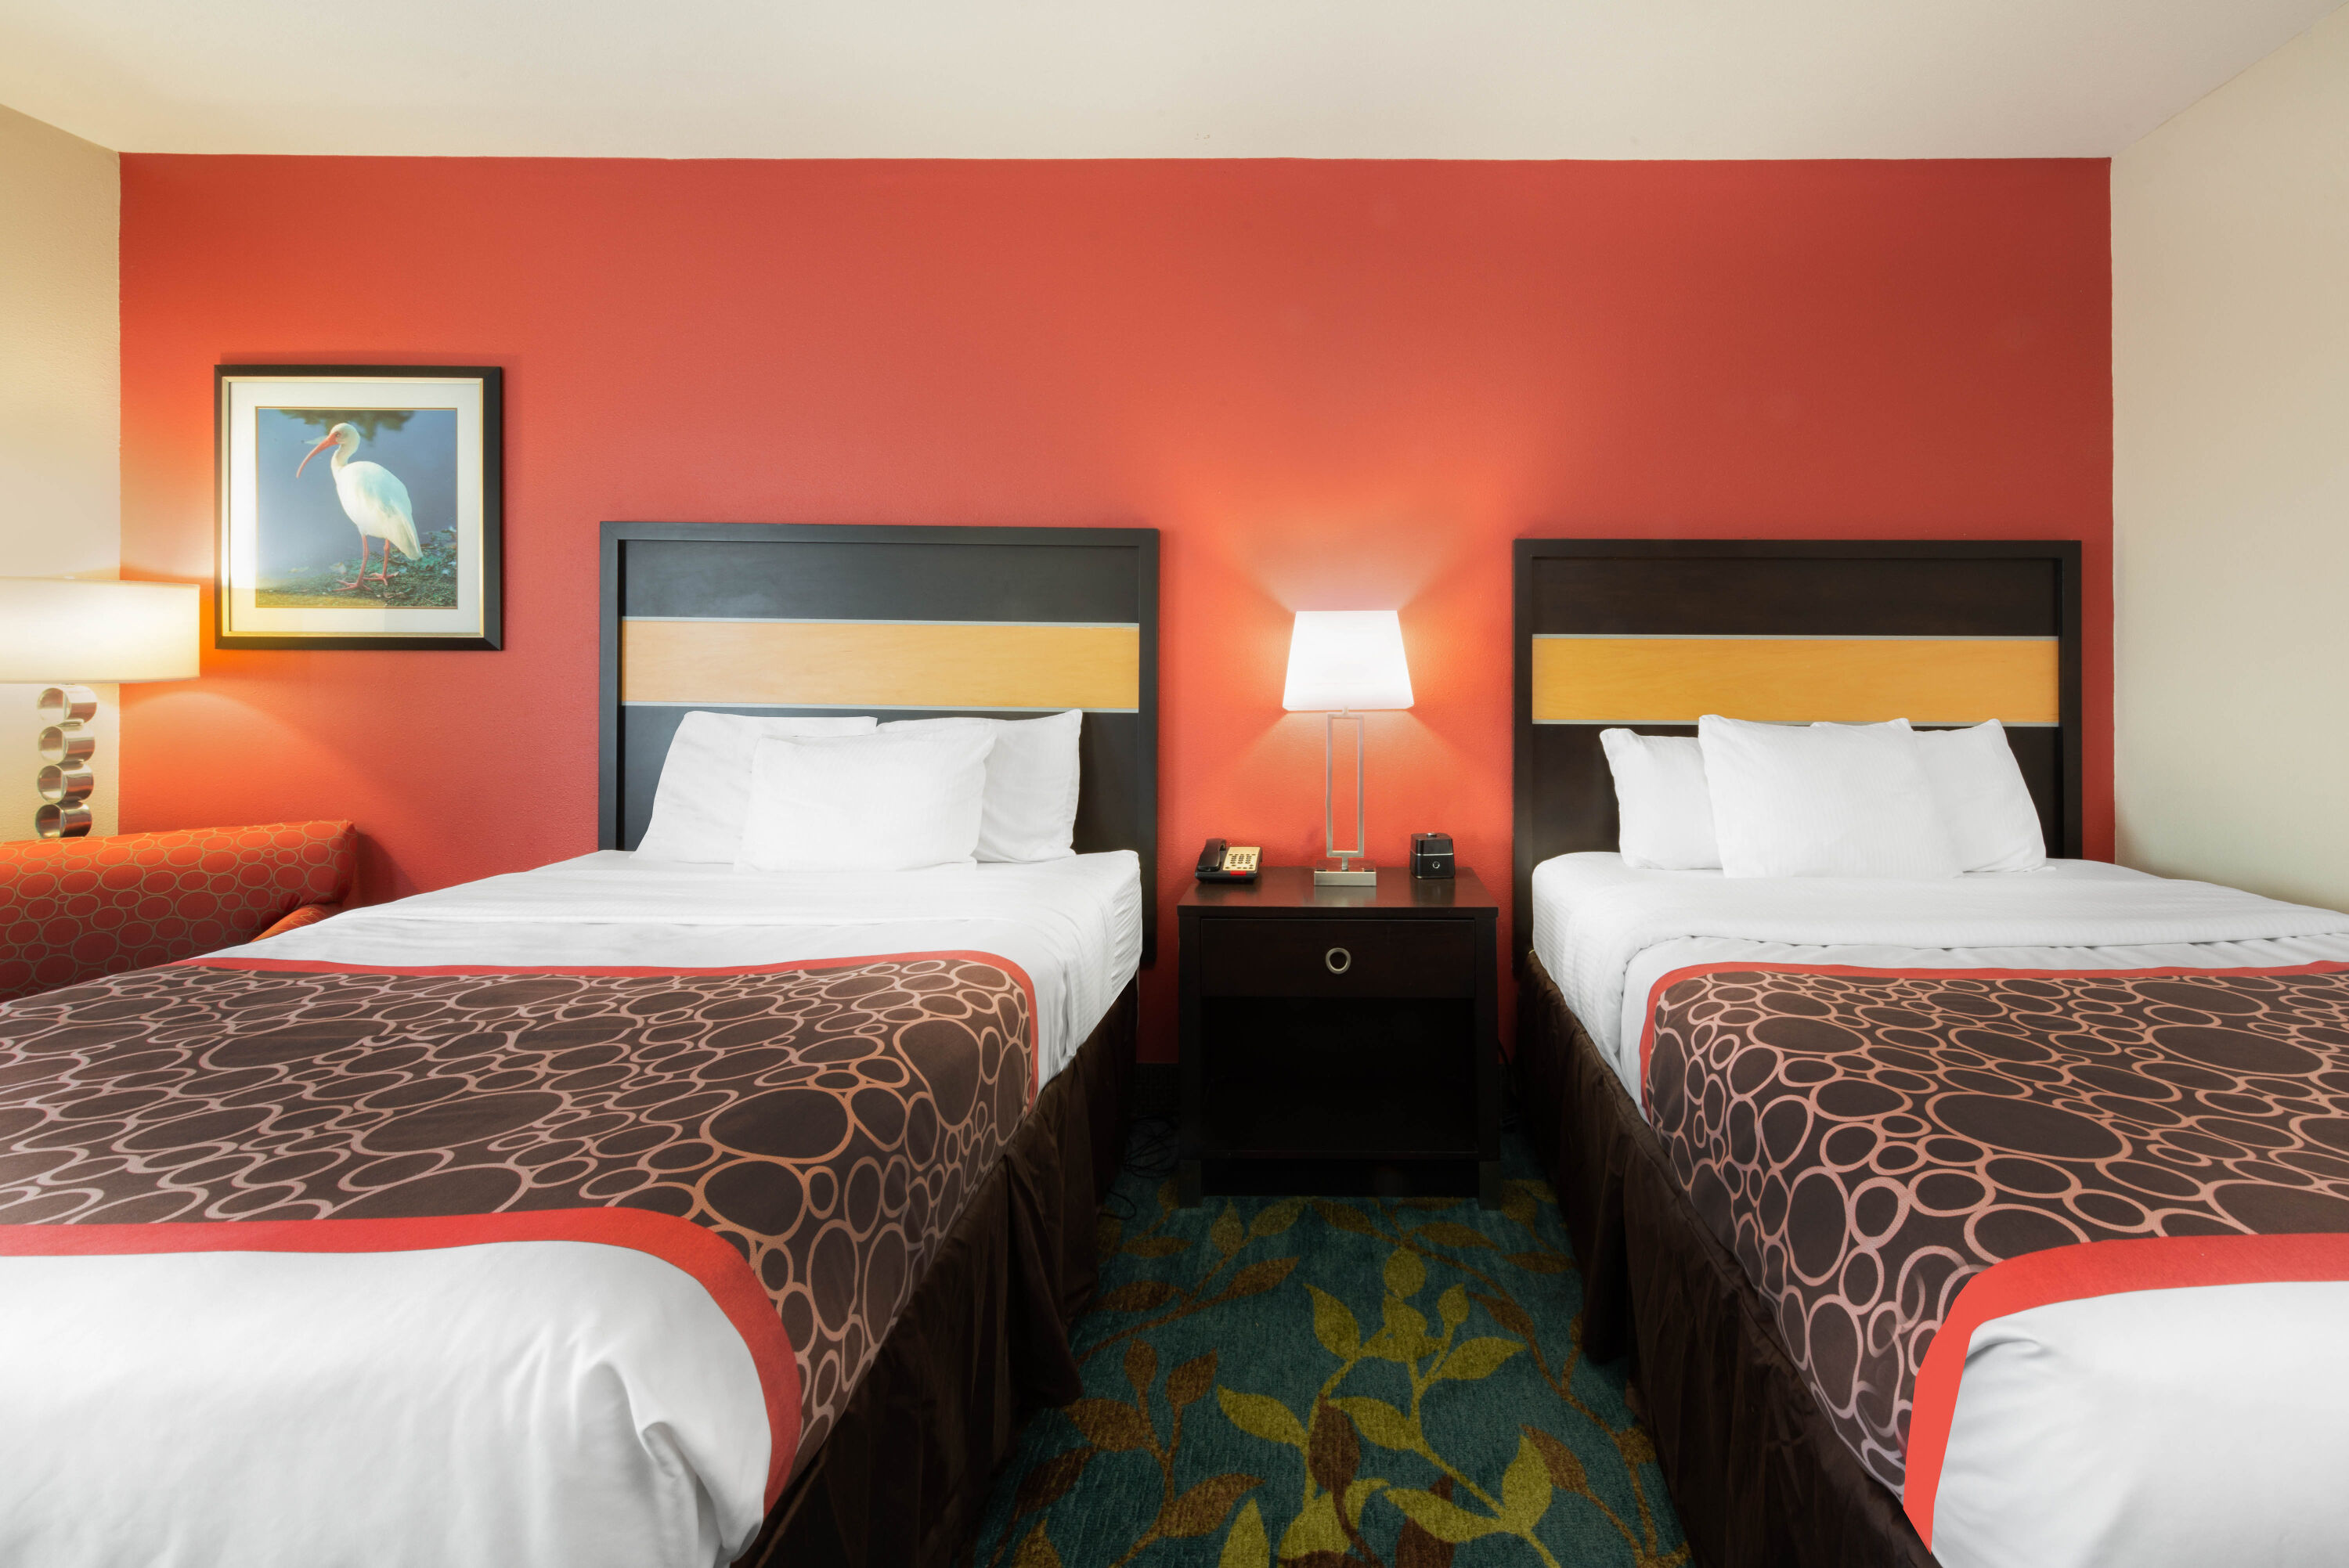 La Quinta Inn amp Suites by Wyndham Leesville Ft Polk Leesville LA Hotels